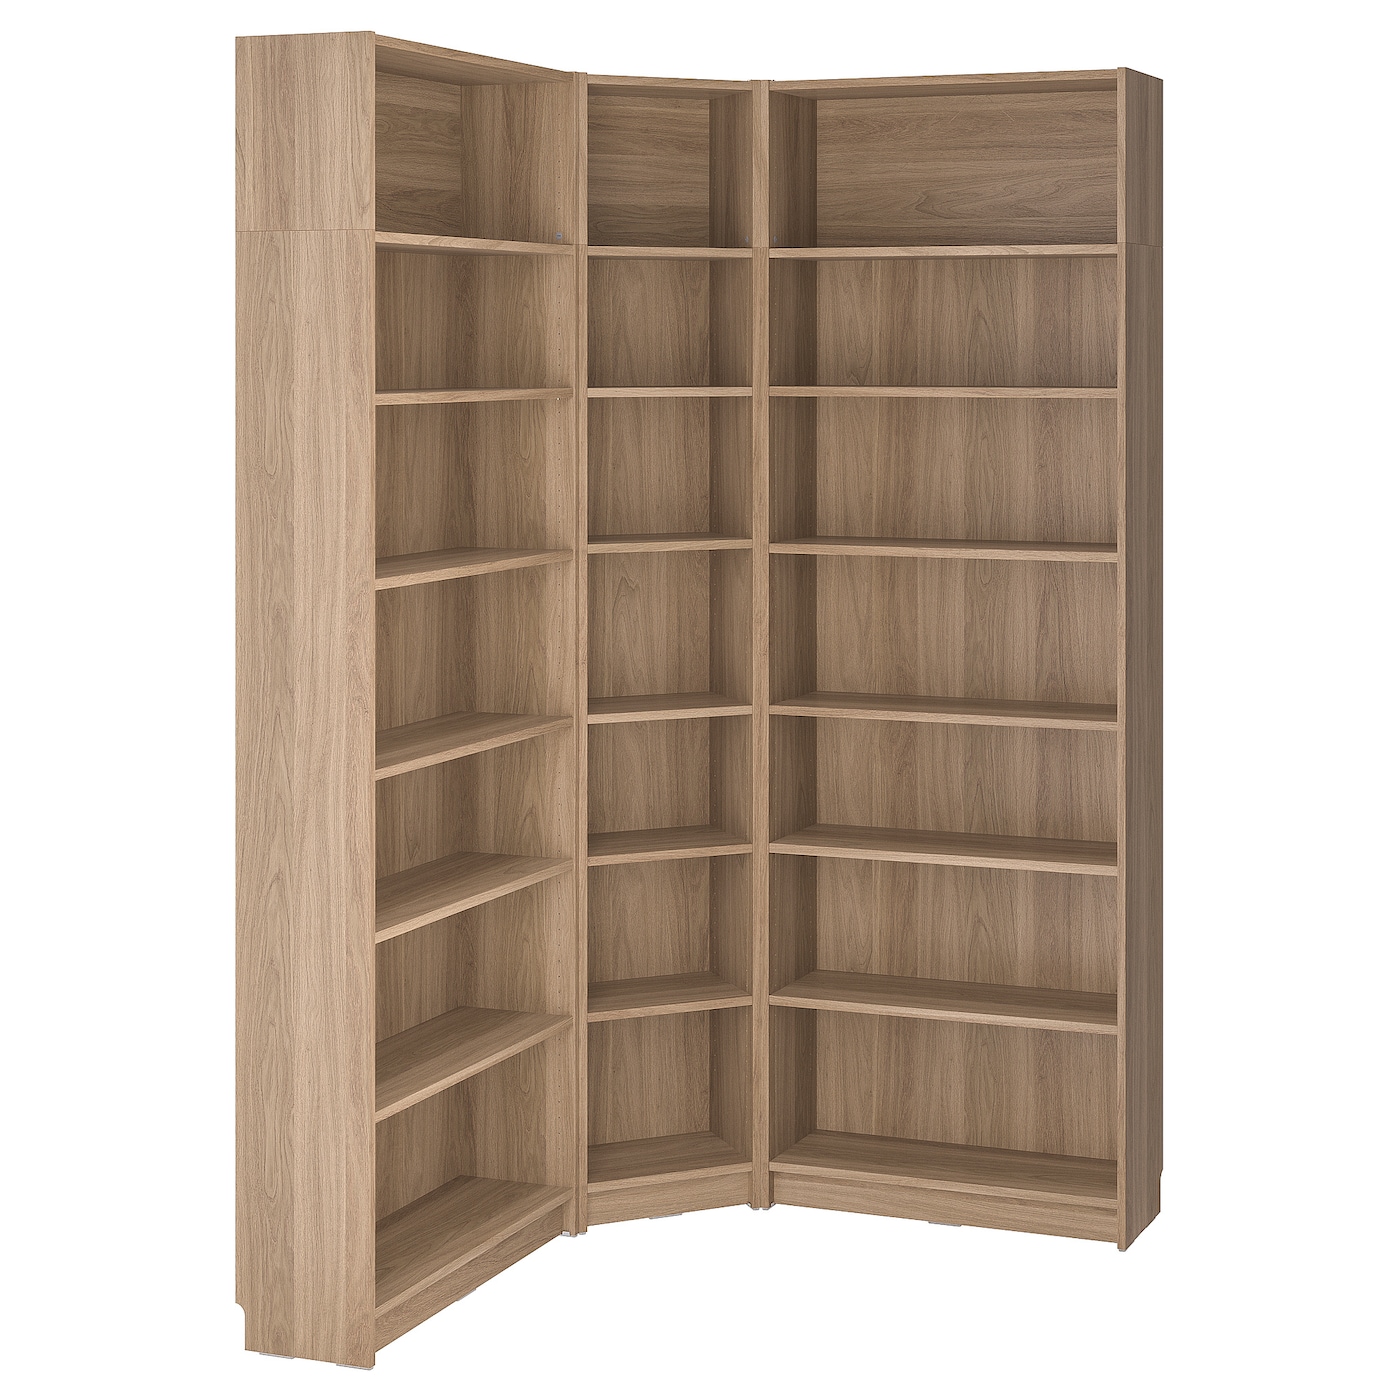 Книжный шкаф -  BILLY IKEA/ БИЛЛИ ИКЕА, 136х28х237 см, под беленый дуб